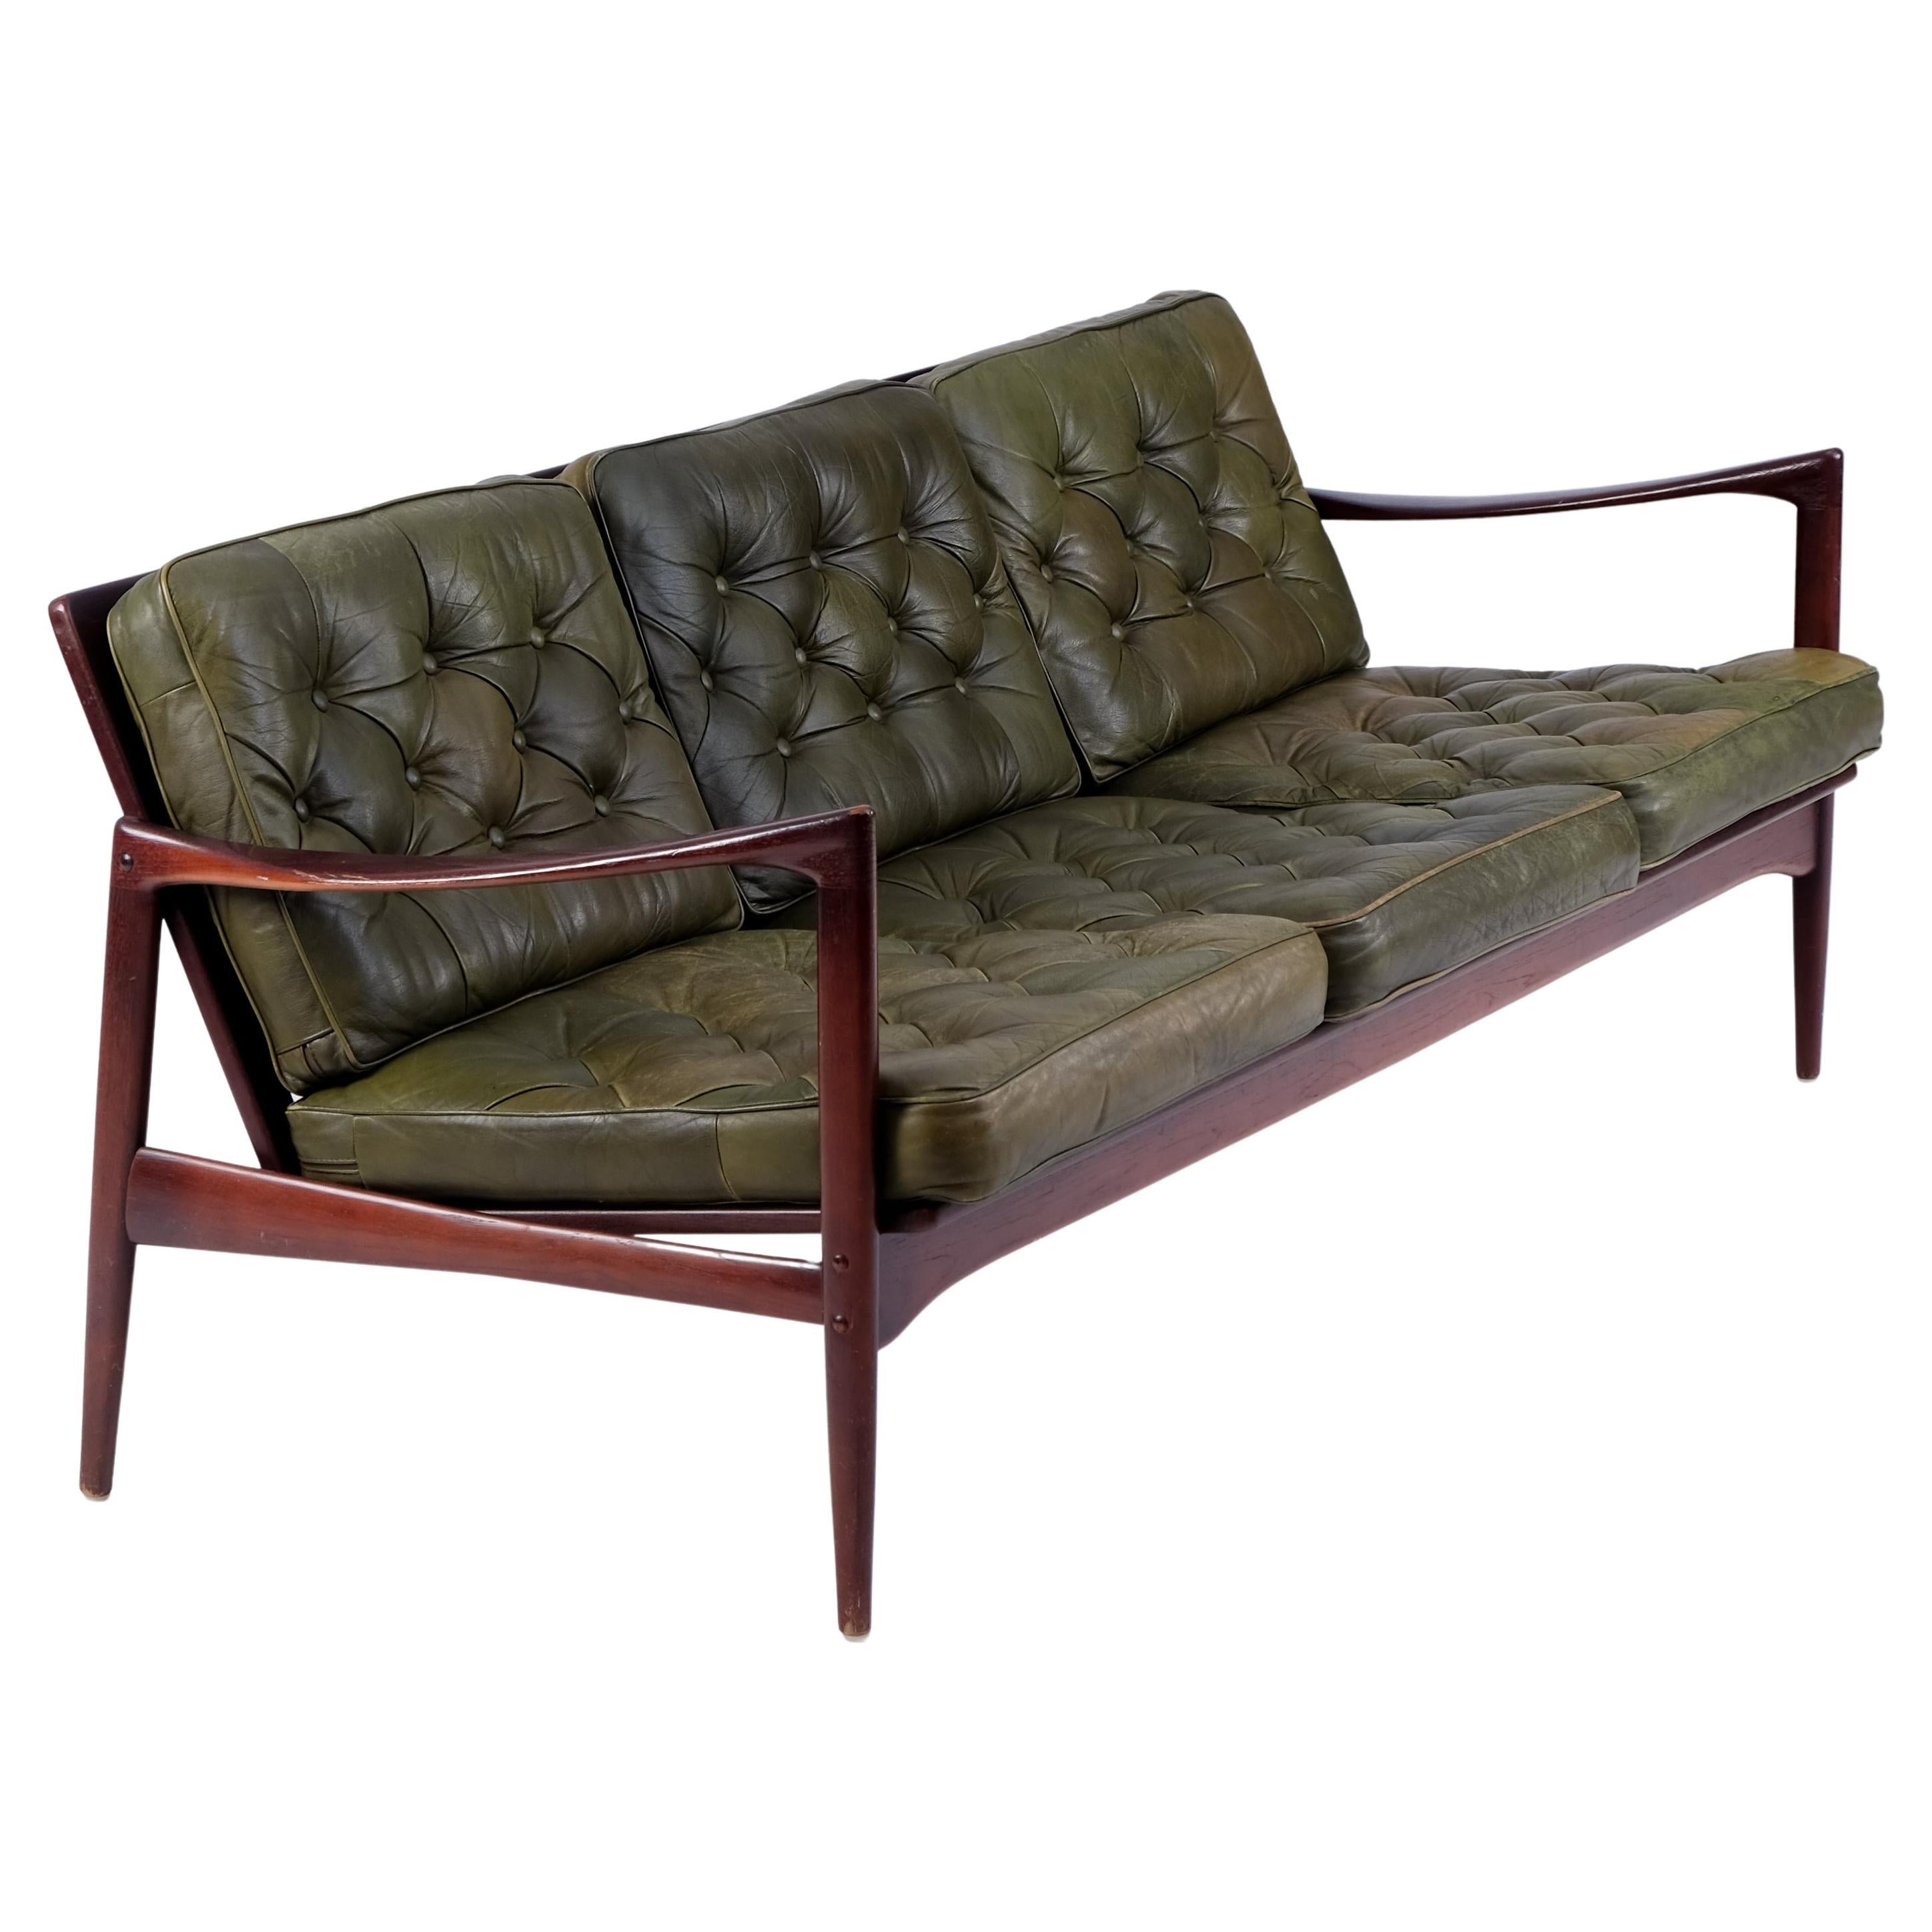 Ib Kofod-Larsen Sofa Model Kandidaten, 1960s For Sale